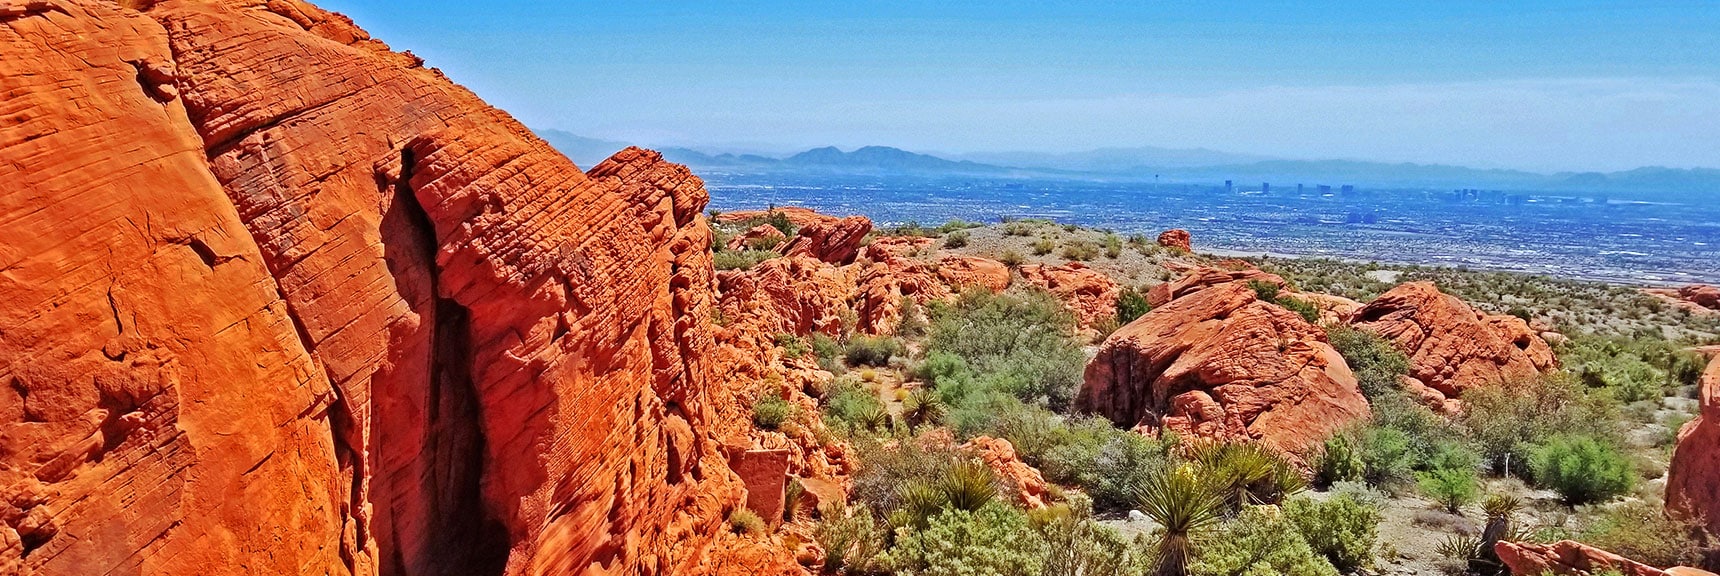 View Toward Las Vegas Strip, Frenchman Mt. in Background (left) | Little Red Rock Las Vegas, Nevada, Near La Madre Mountains Wilderness